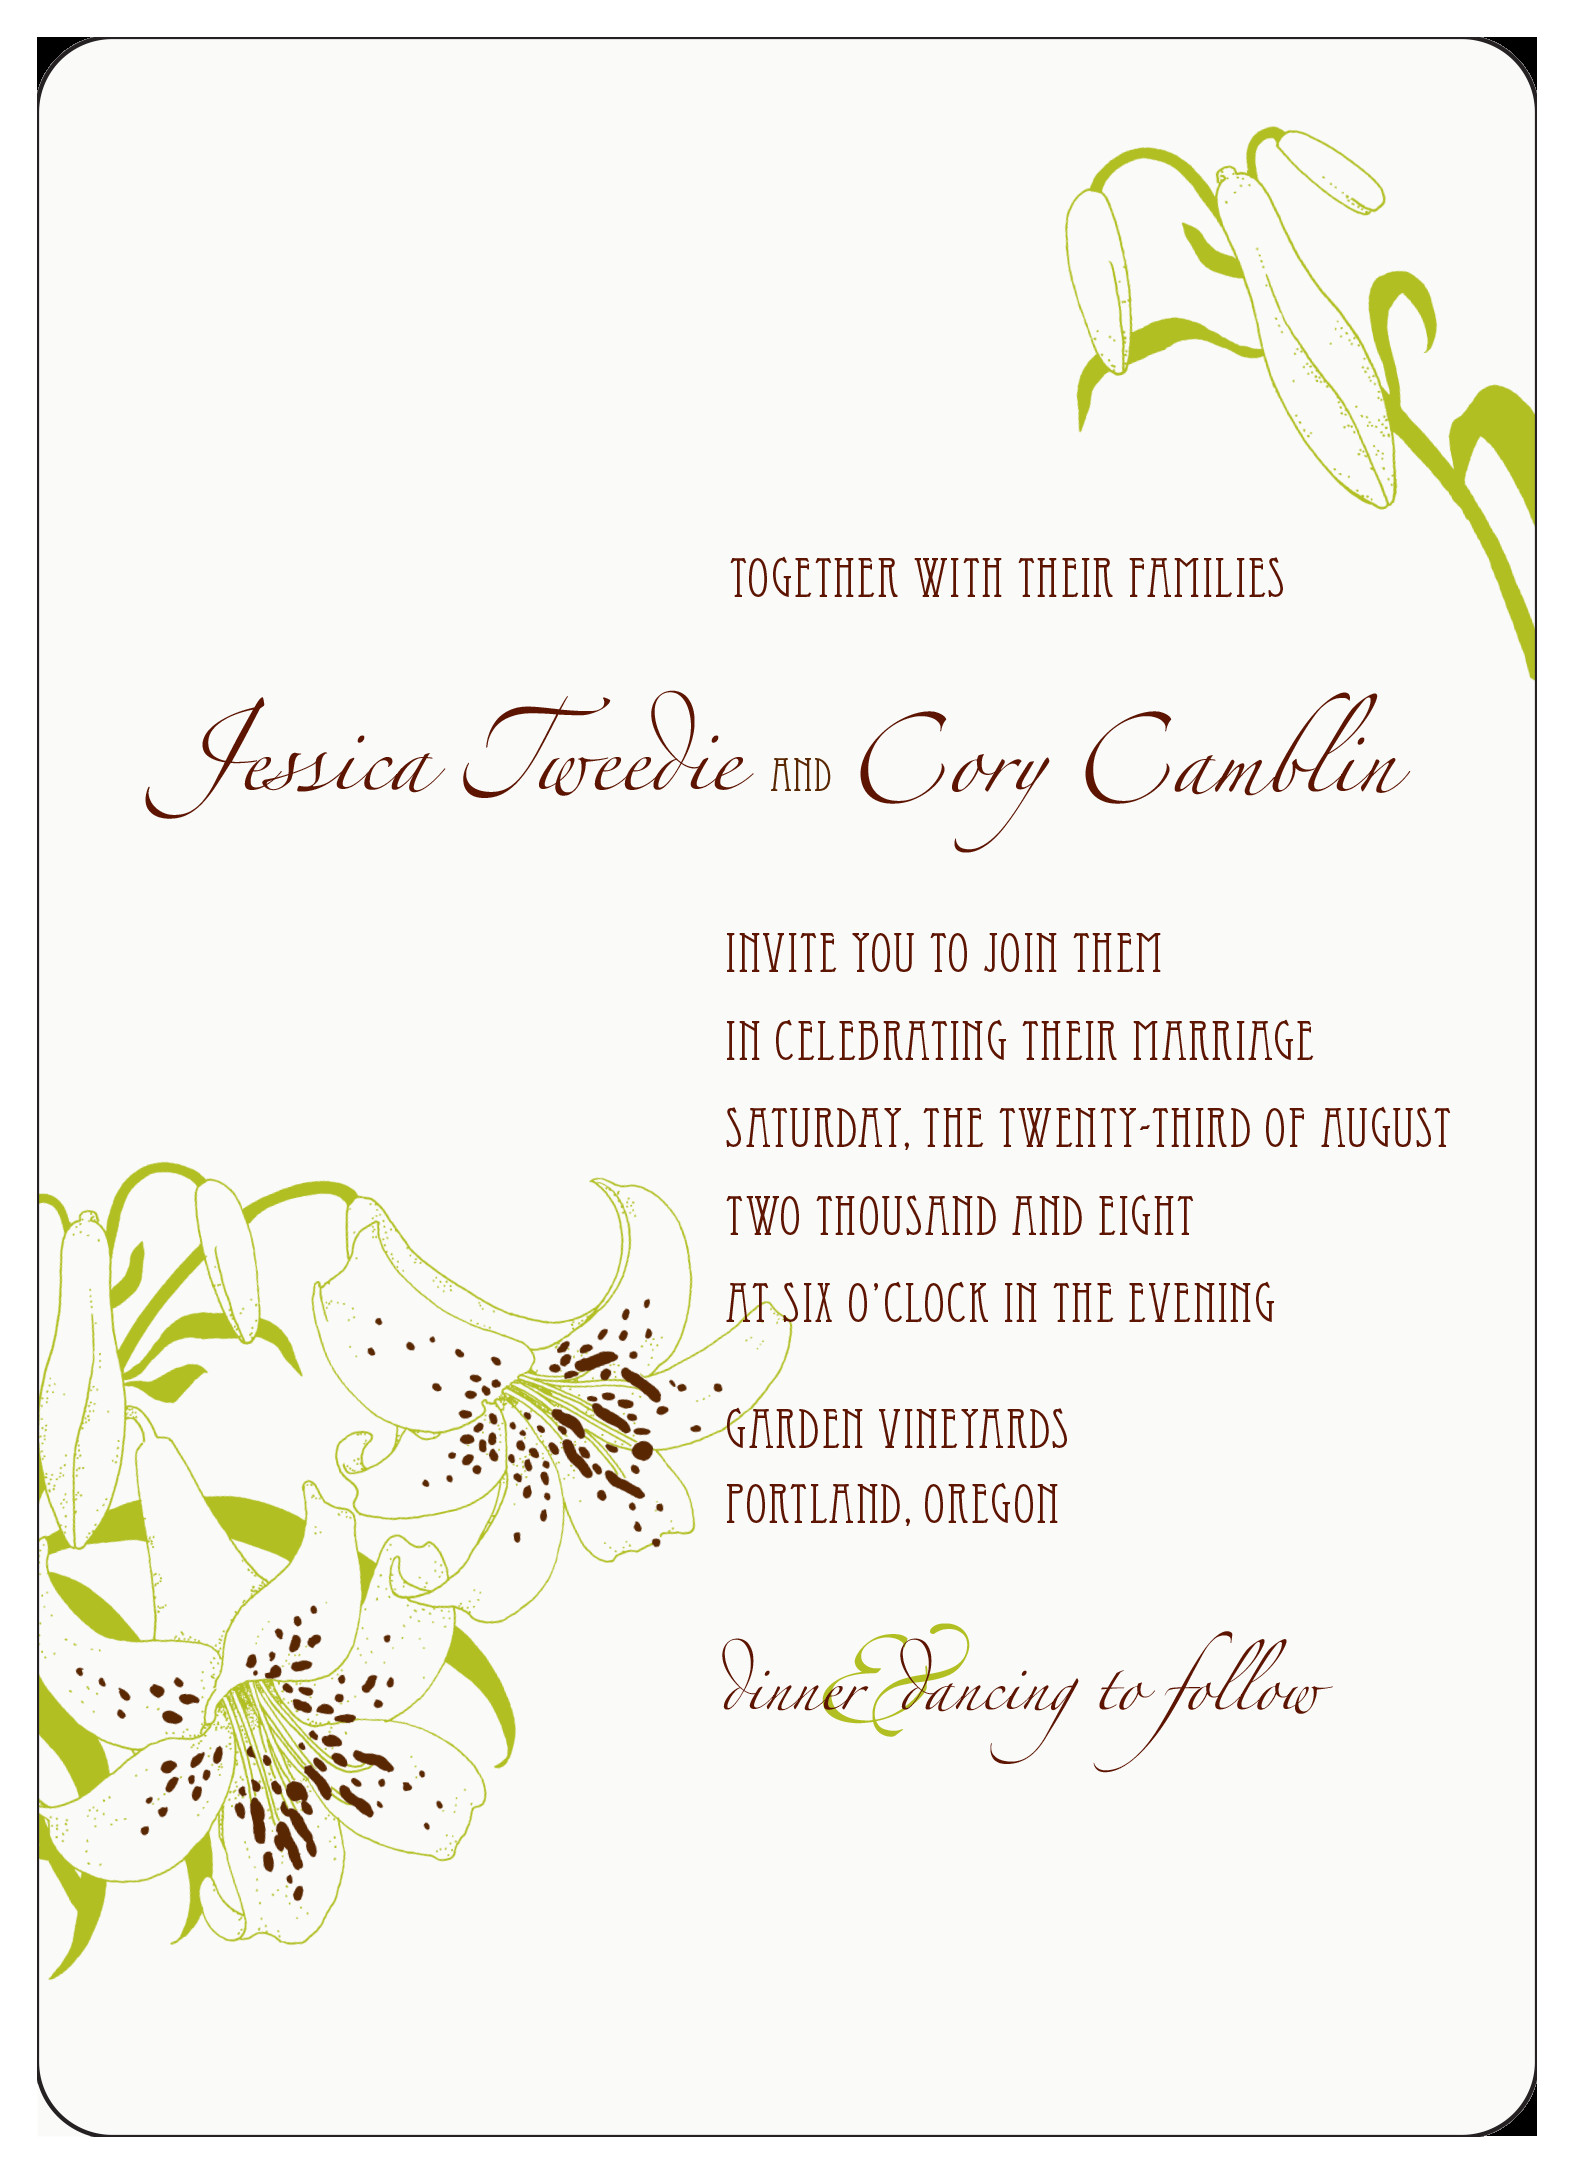 Adobe Illustrator Wedding Invitation Template Adobe Illustrator Wedding Invitation 2008 by Cory